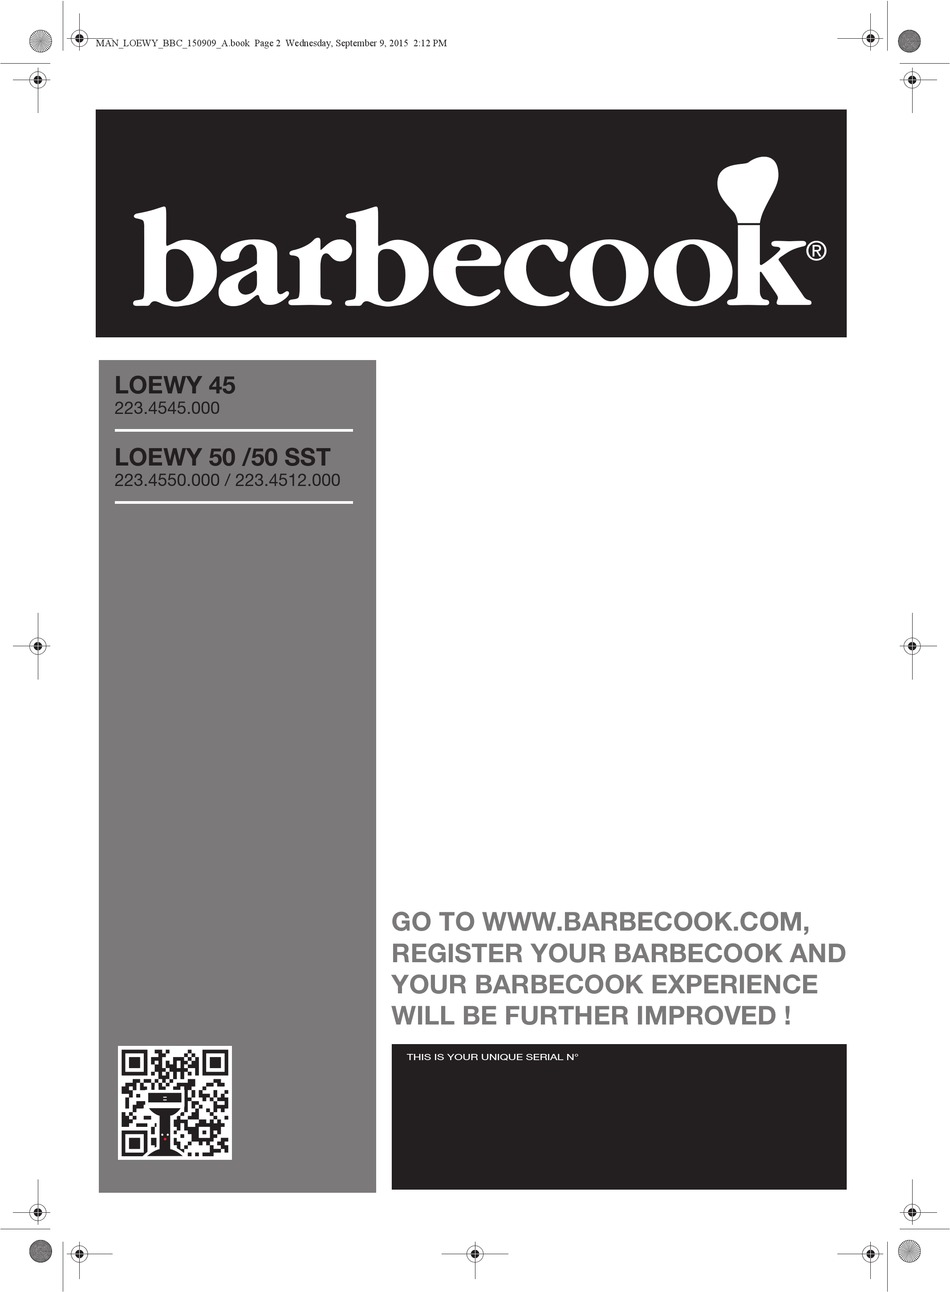 Graan vers Samuel BARBECOOK LOEWY 45 USER MANUAL Pdf Download | ManualsLib